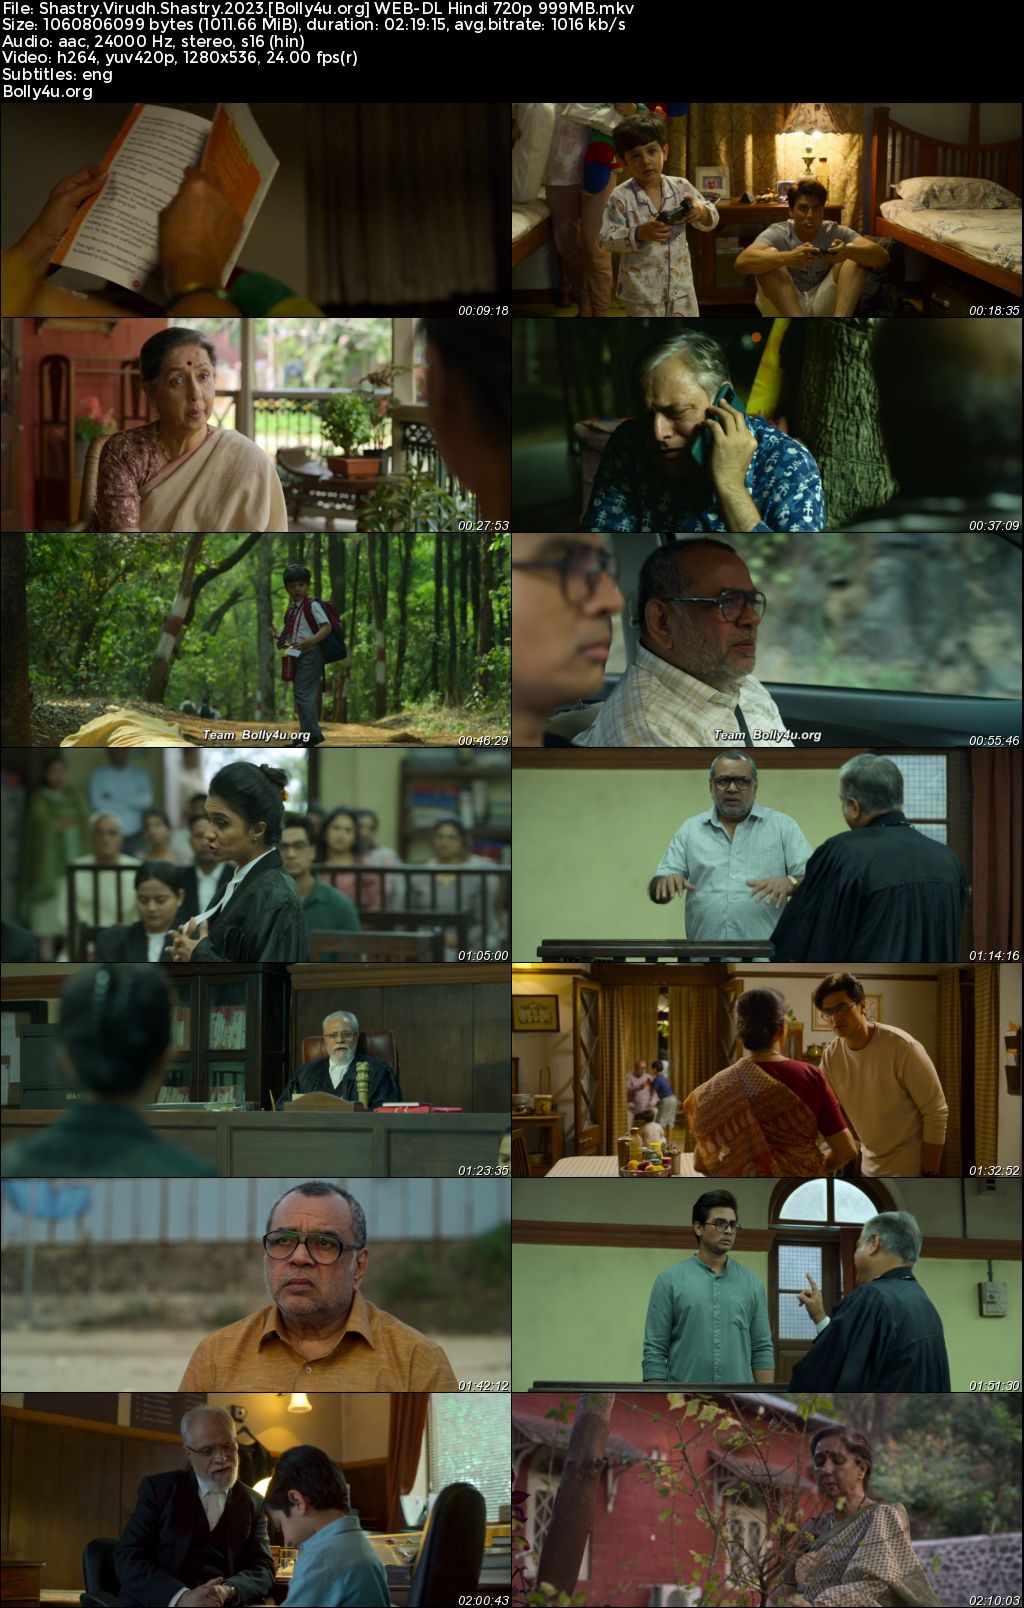 Shastry Viruddh Shastry 2023 WEB-DL Hindi Full Movie Download 1080p 720p 480p